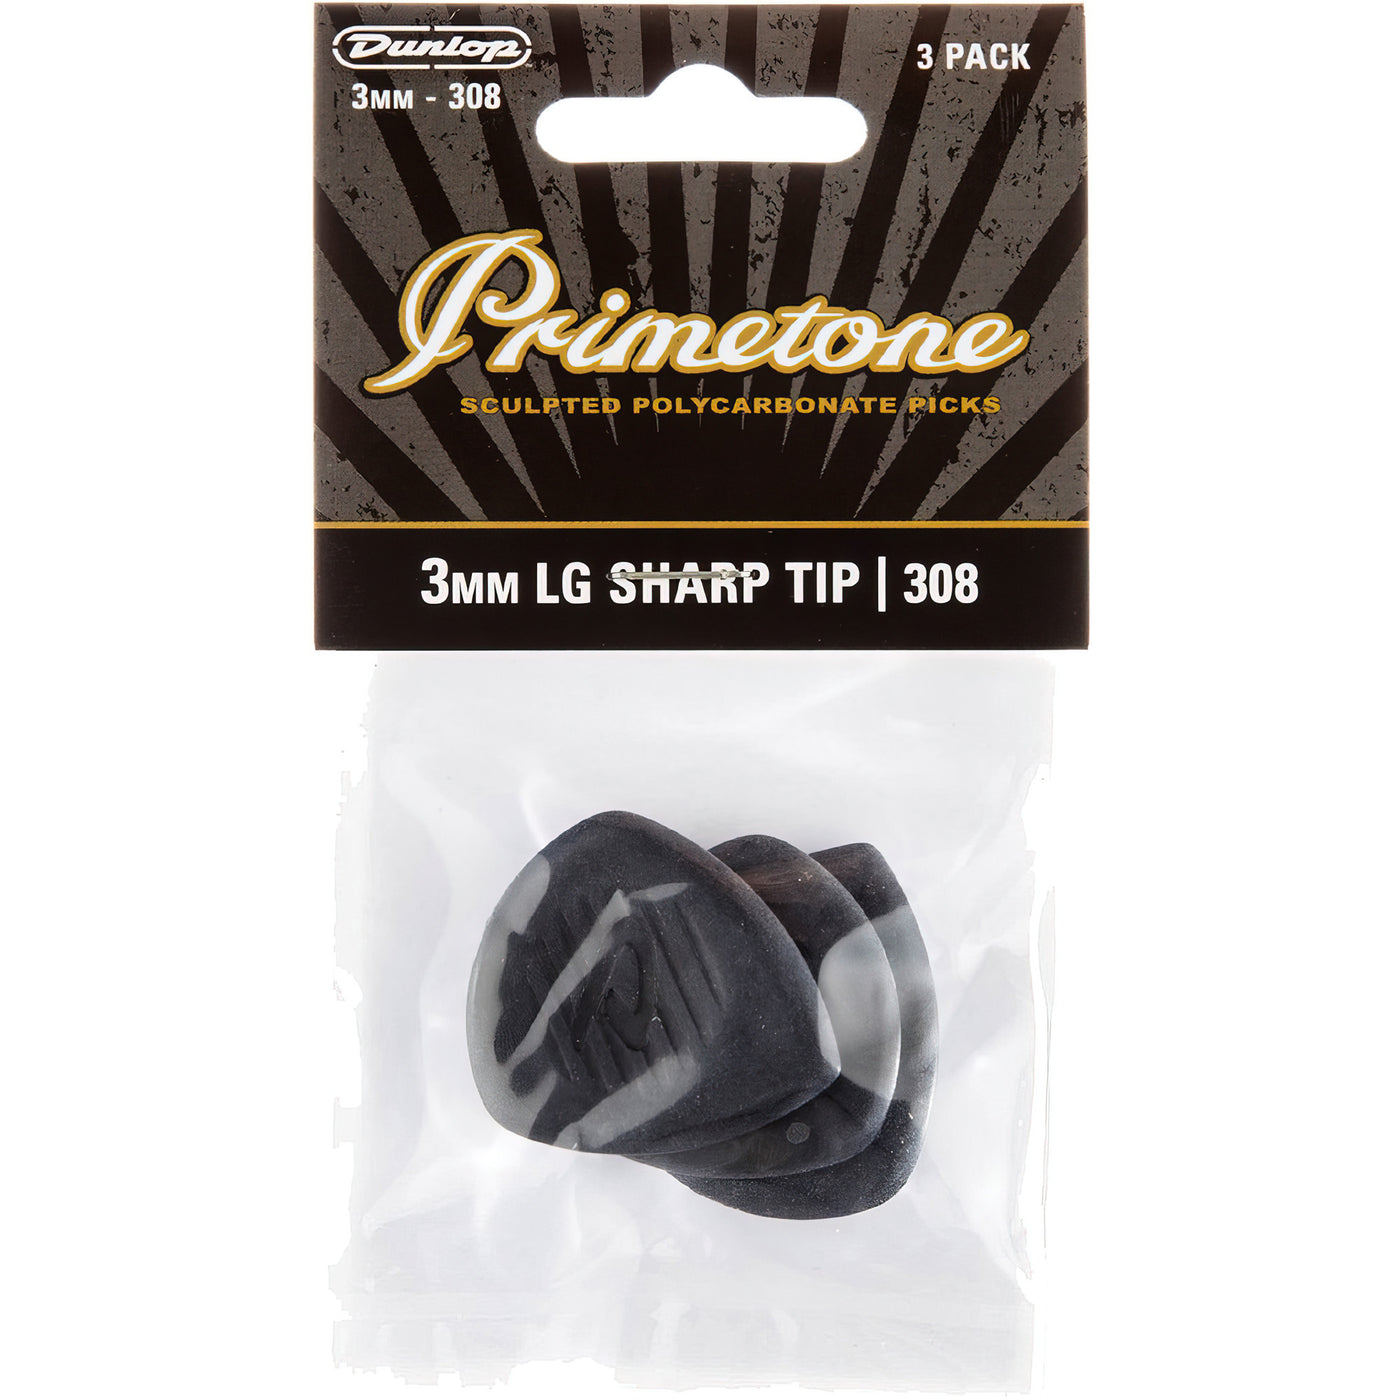 Dunlop Primetone Sharp Tip Guitar Picks, Black, 3mm Large, 3-Pack (477P308)